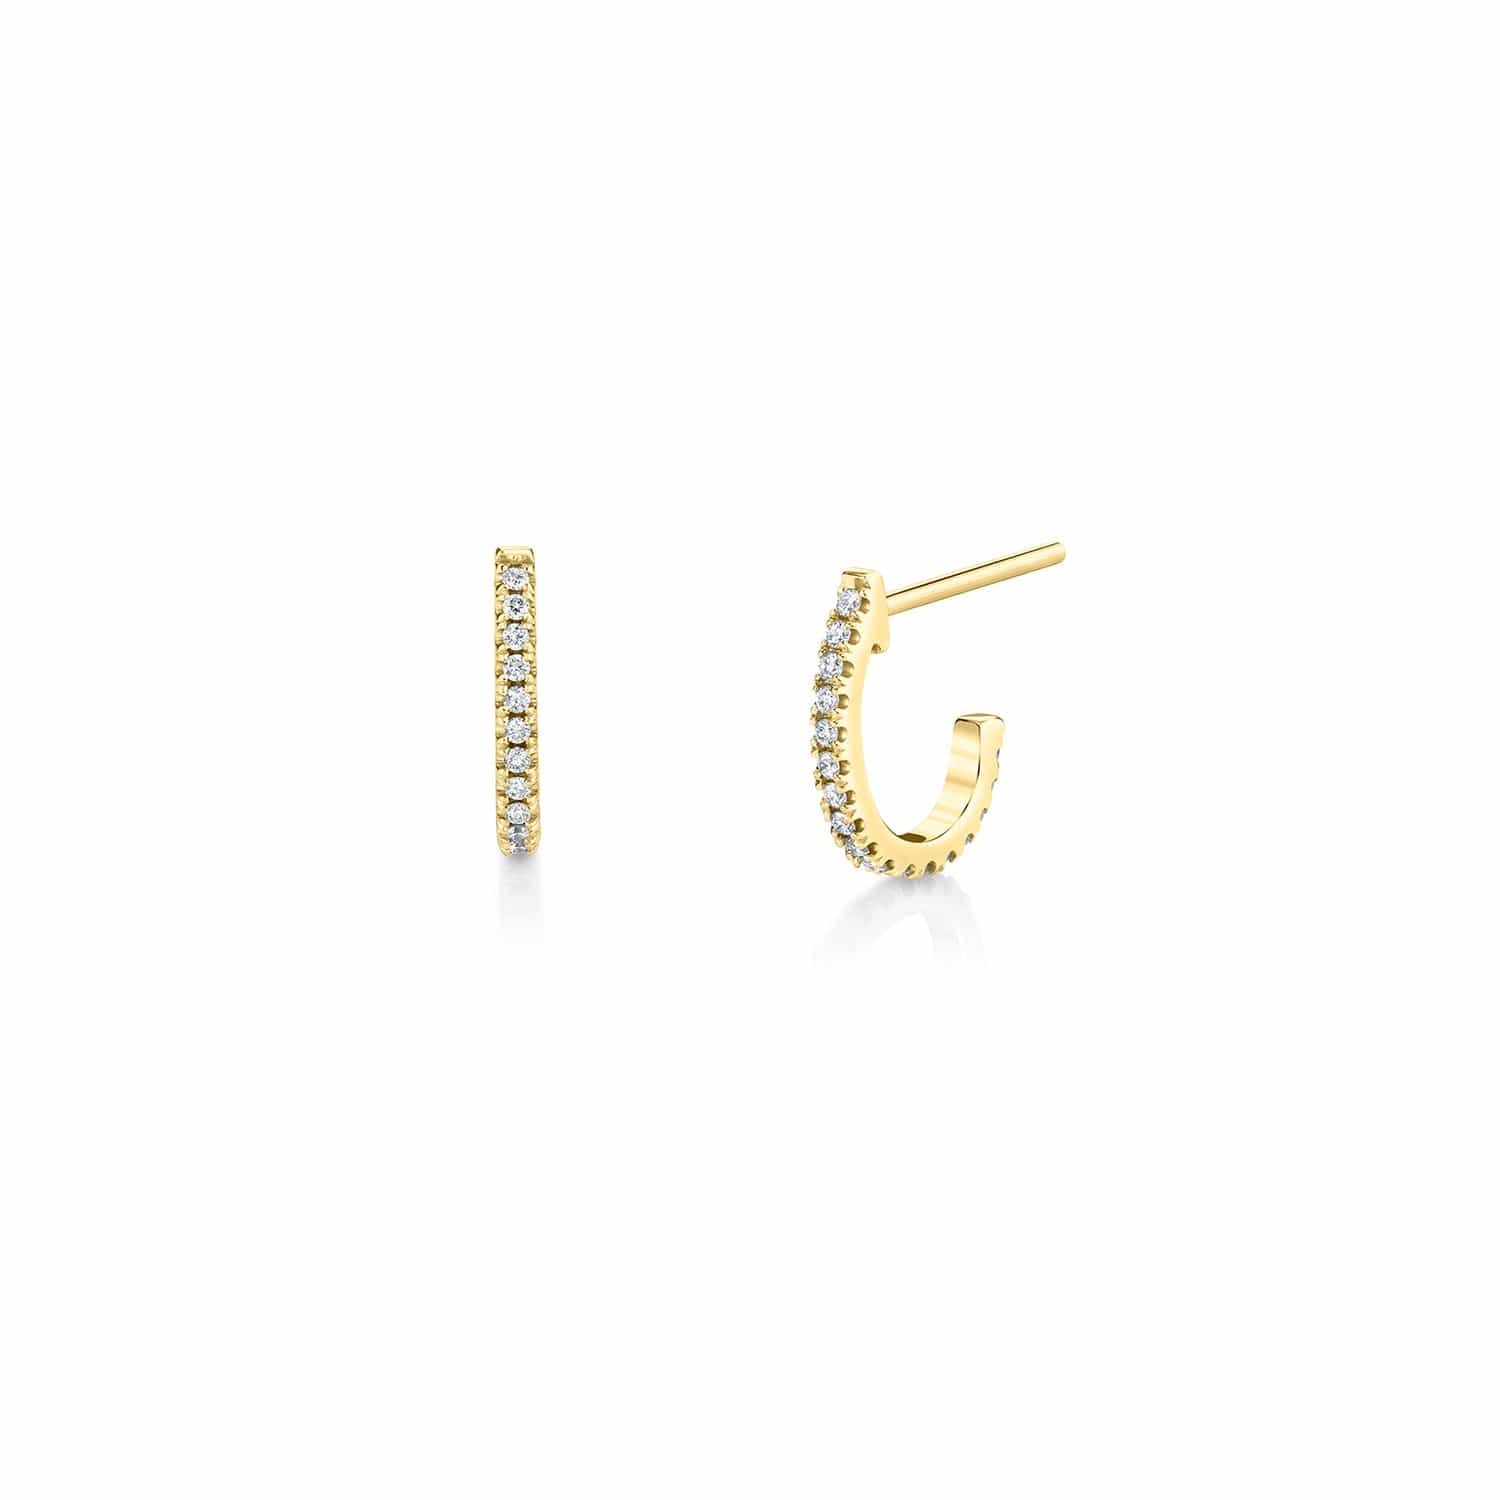 MICHAEL M Earrings 14K Yellow Gold Diamond Huggie Hoop Earrings ER270YG